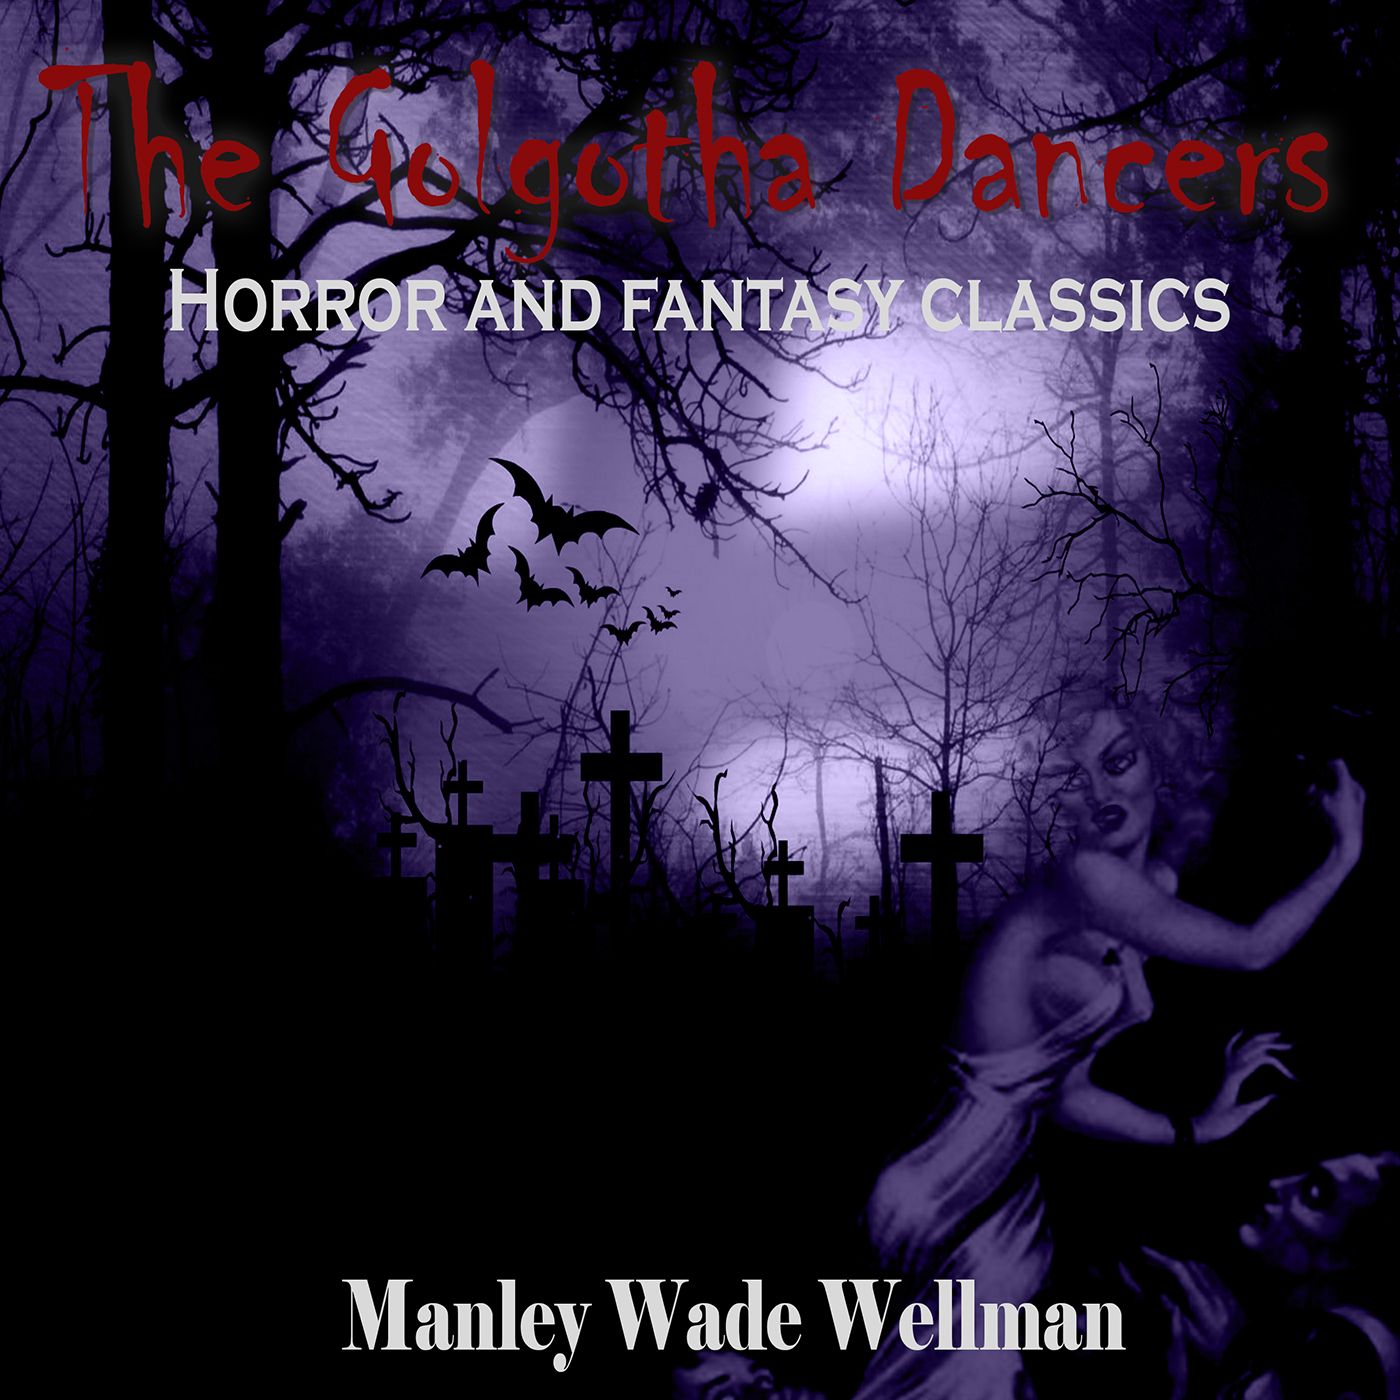 The Golgotha Dancers, lydbog af Manly Wade Wellman